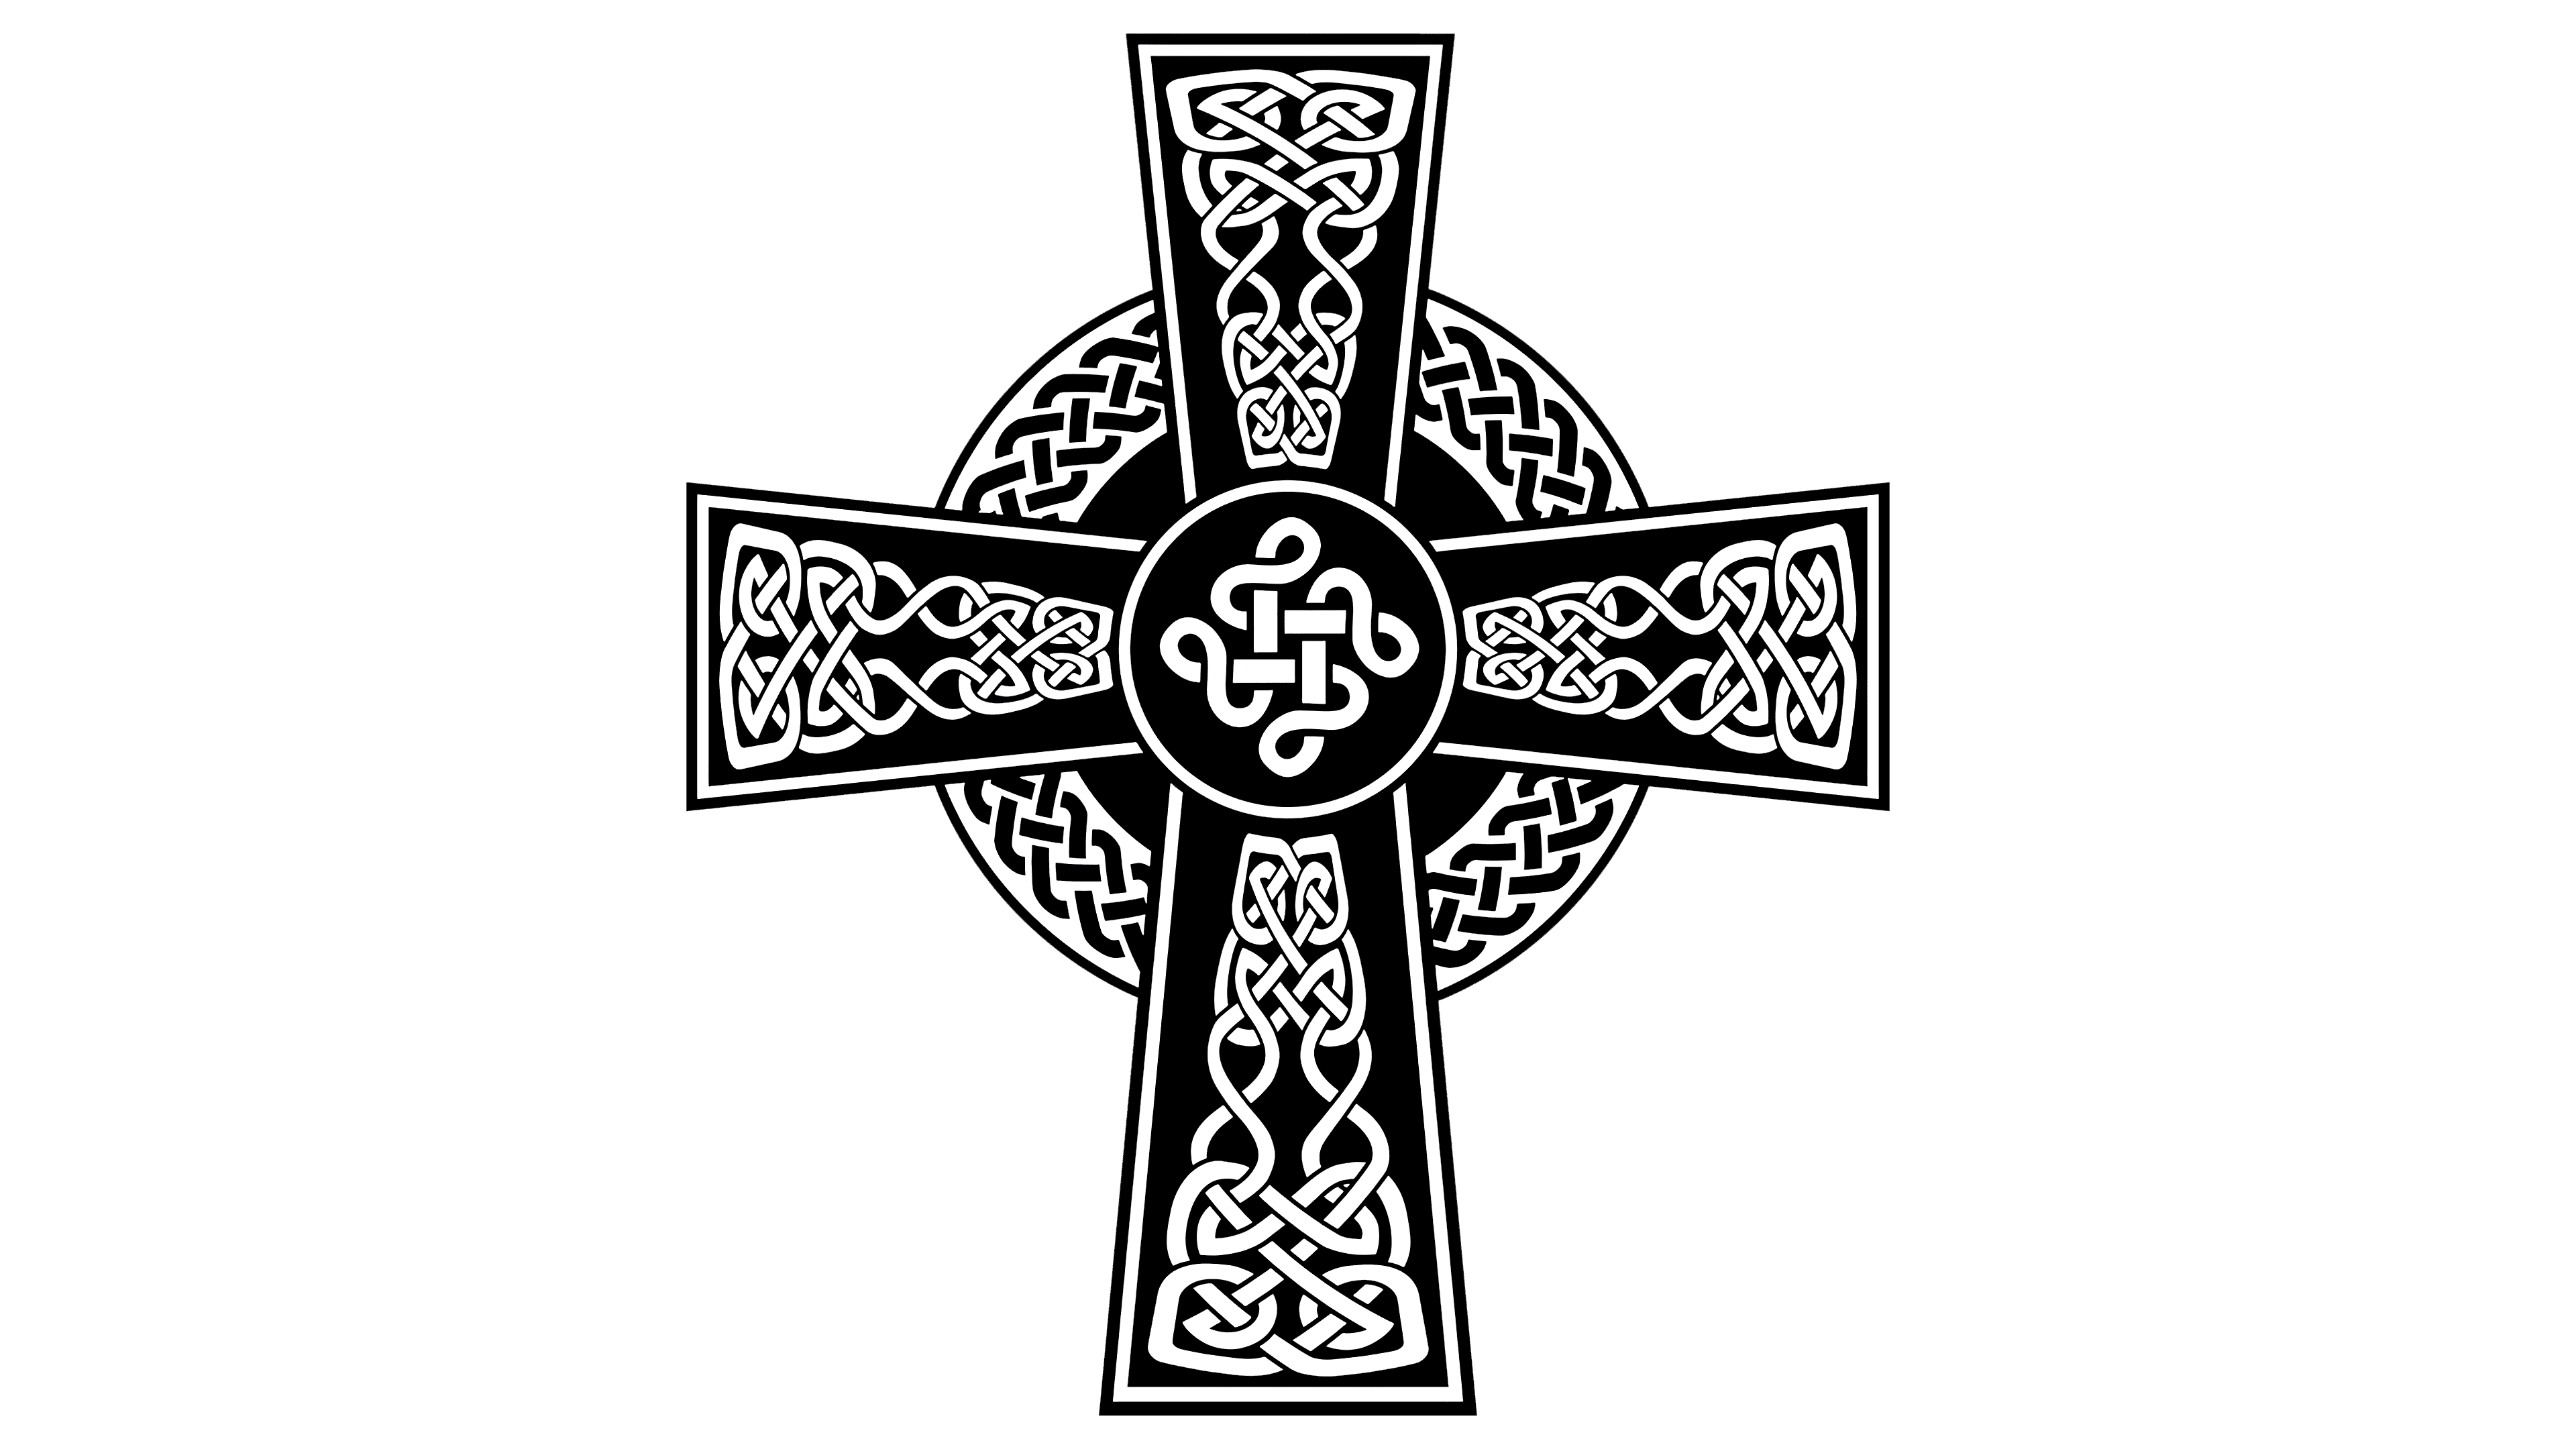 Celtic Symbol Cross Tattoo Design — LuckyFish, Inc. and Tattoo Santa Barbara